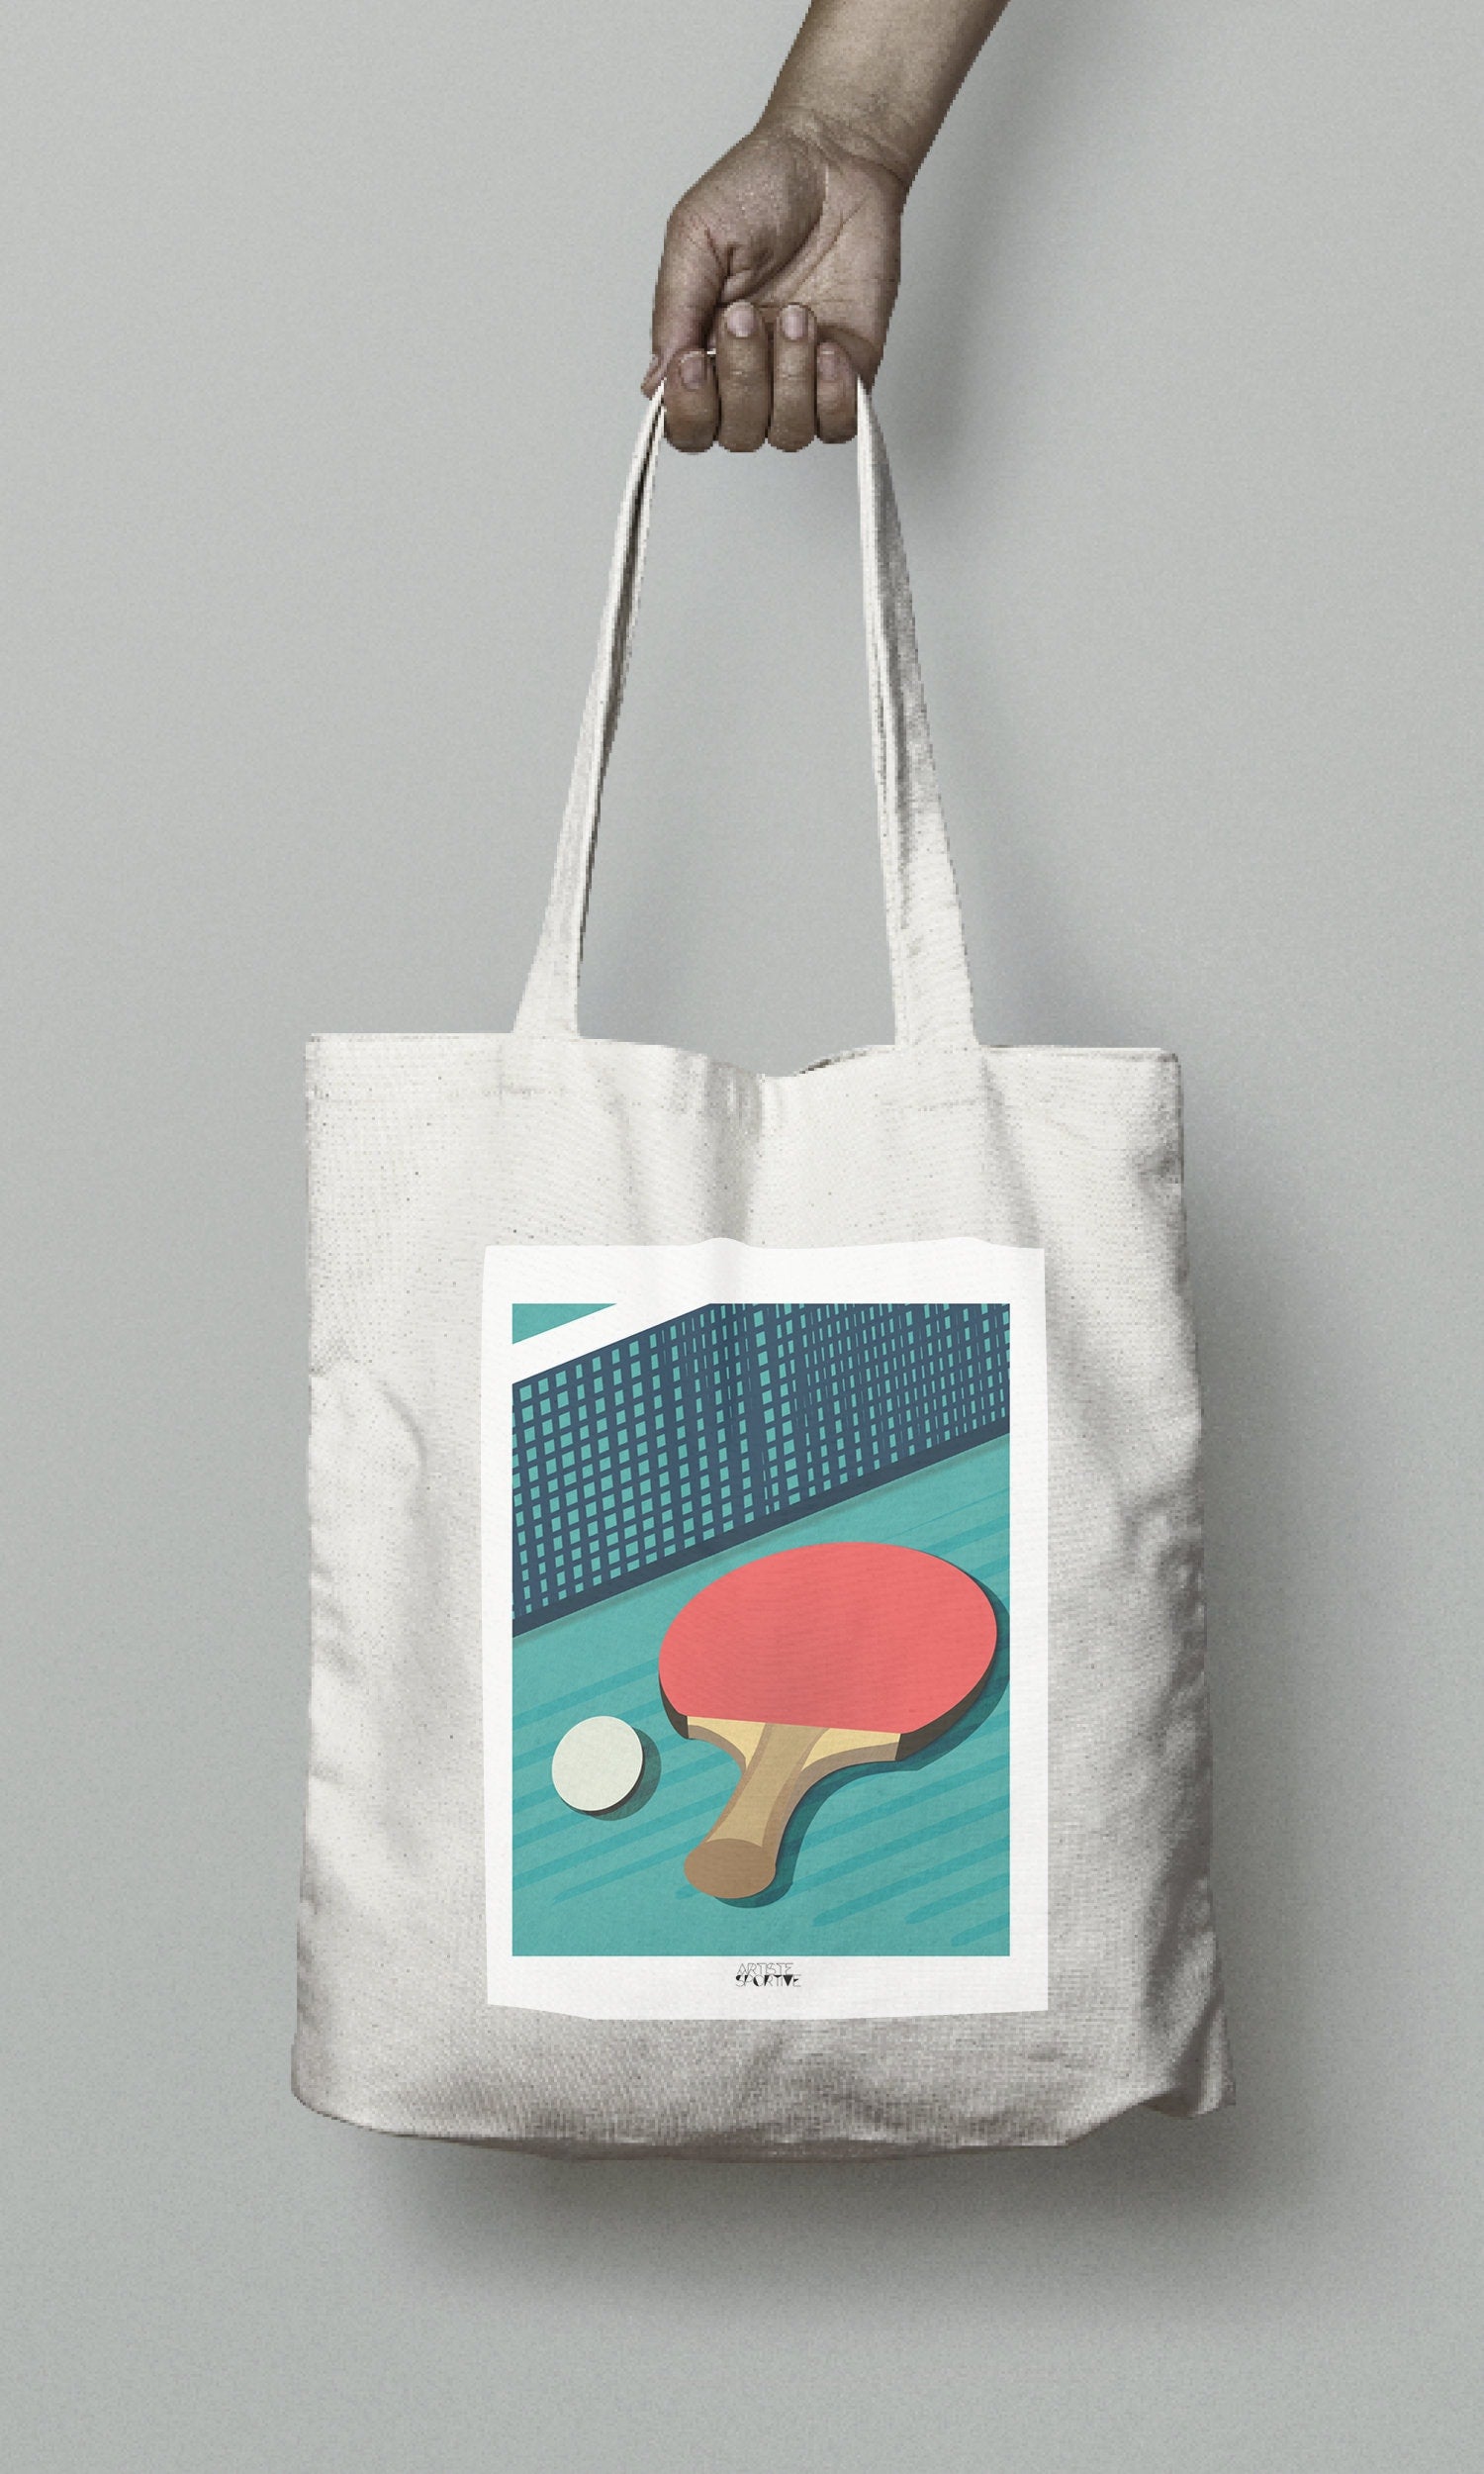 Tote bag ou sac Ping Pong La raquette de tennis de table